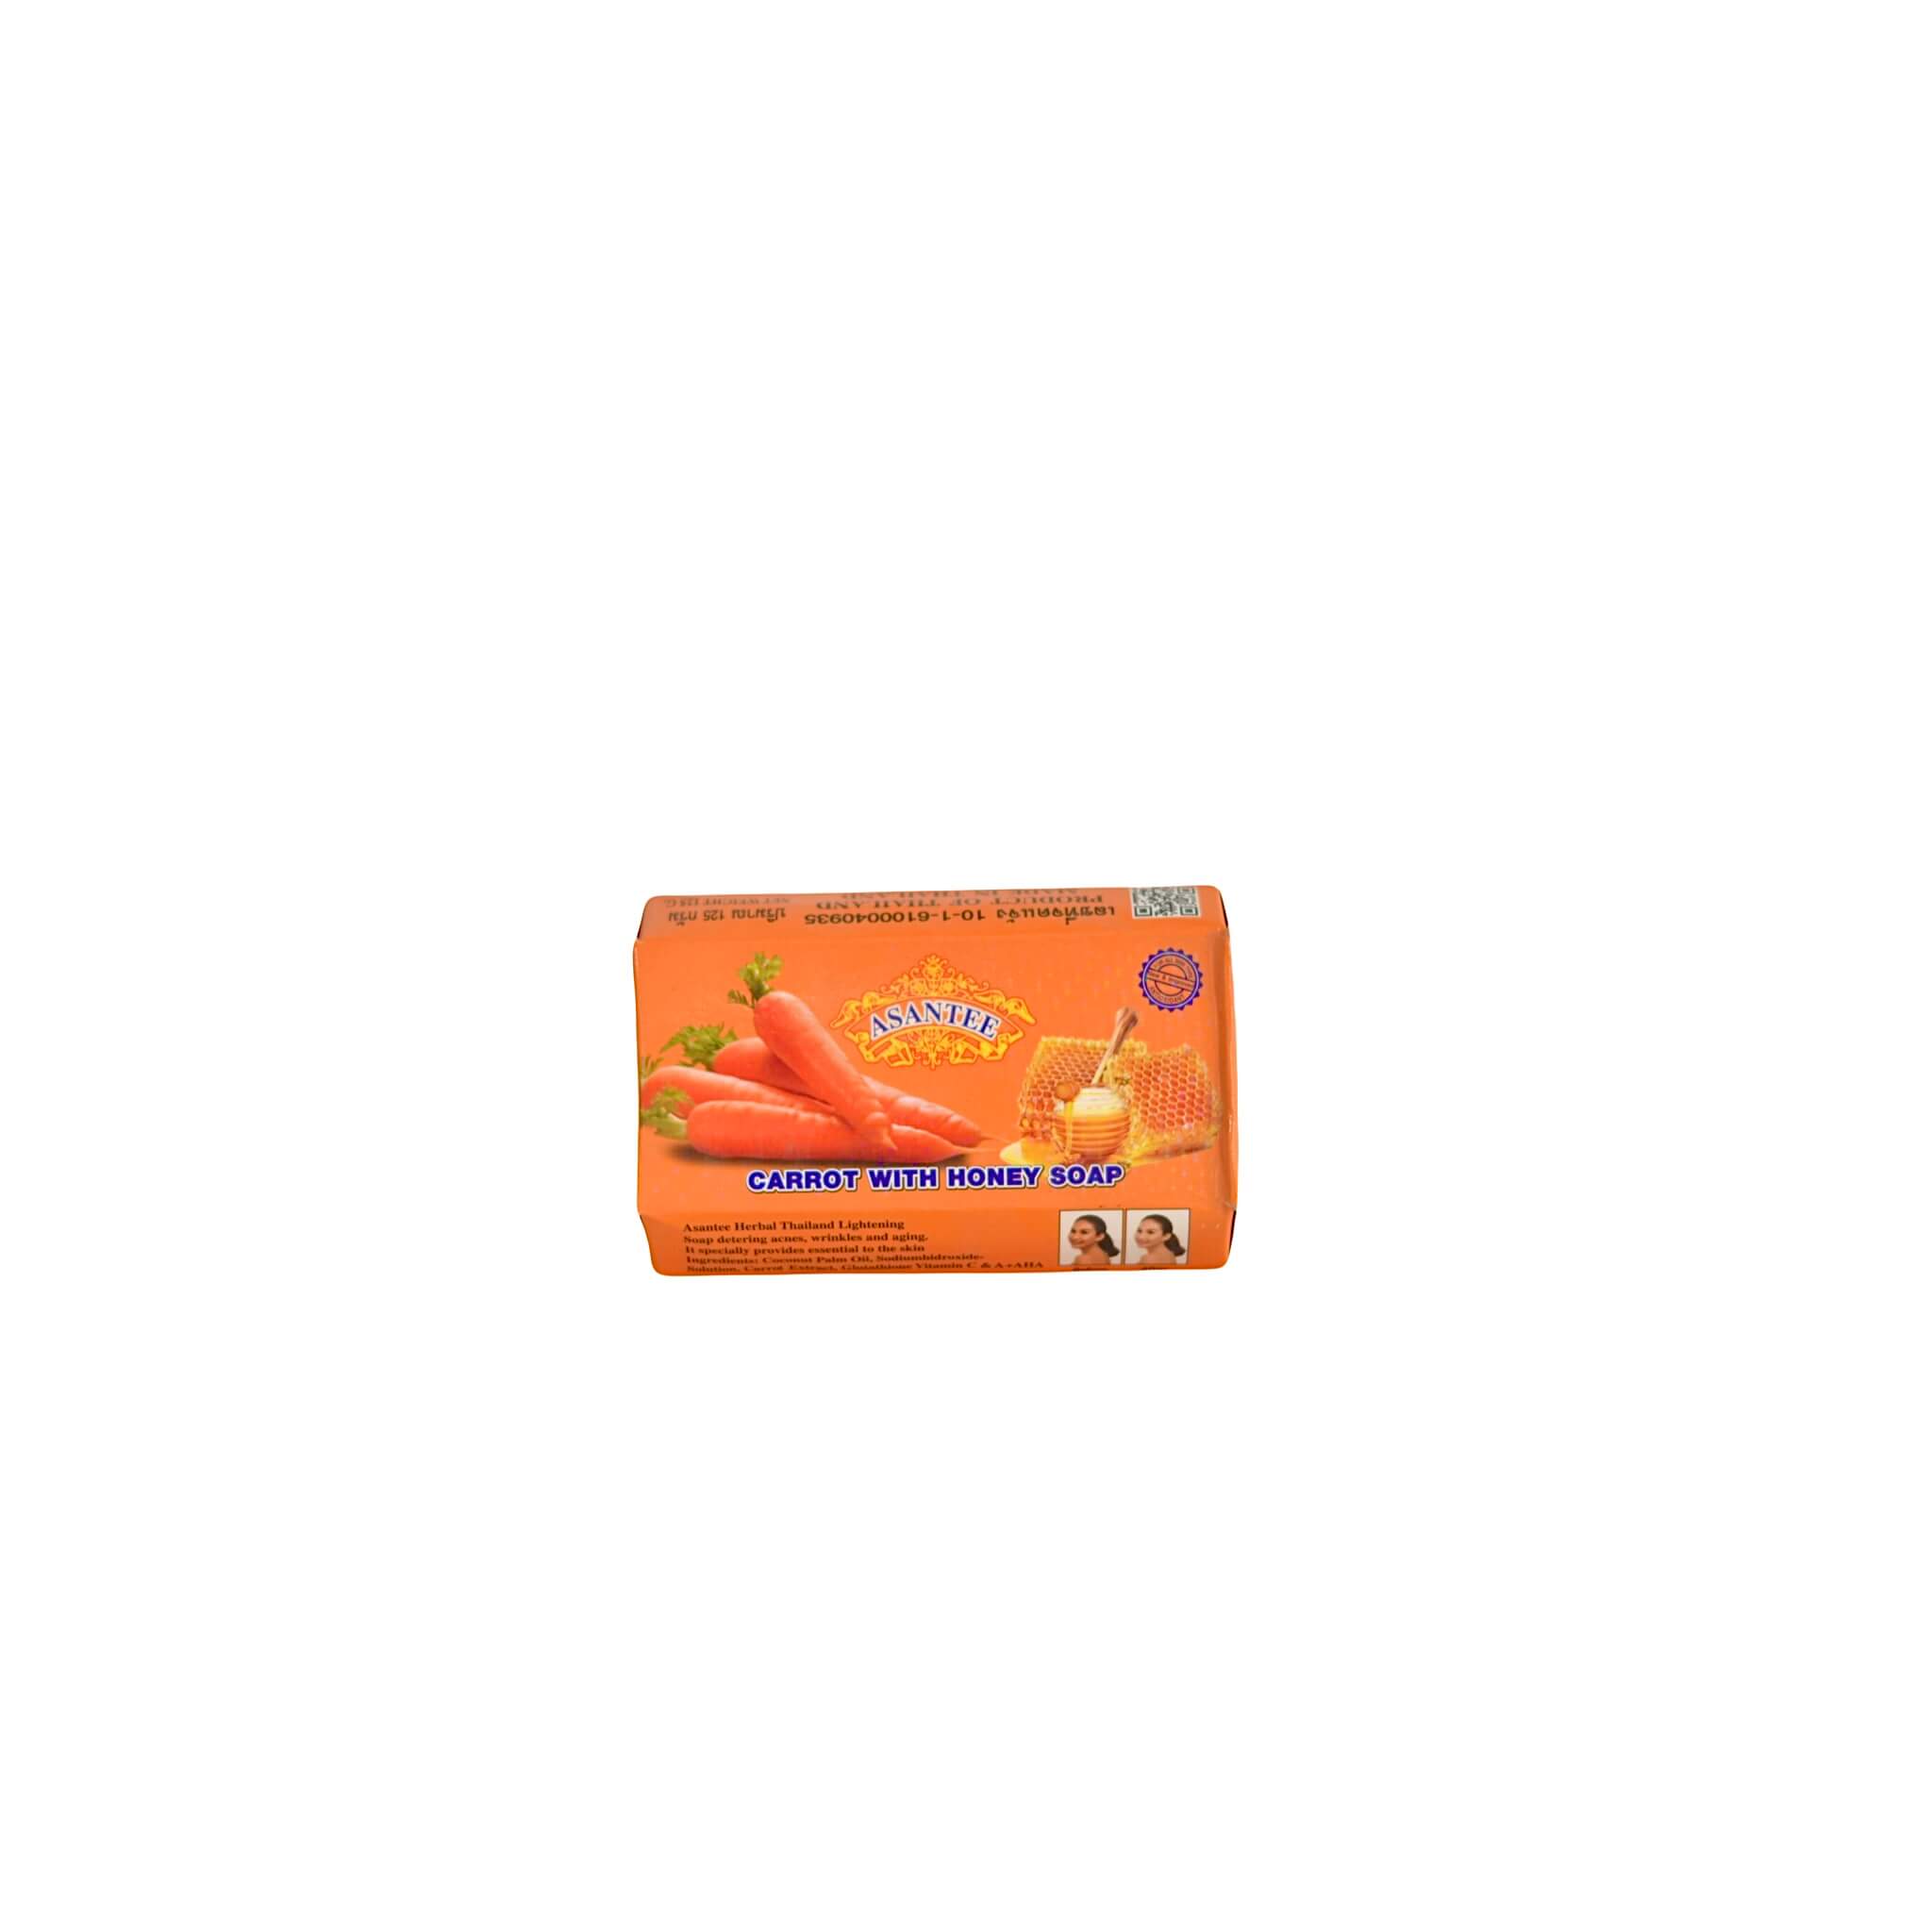 a bar of Asantee carrot soap